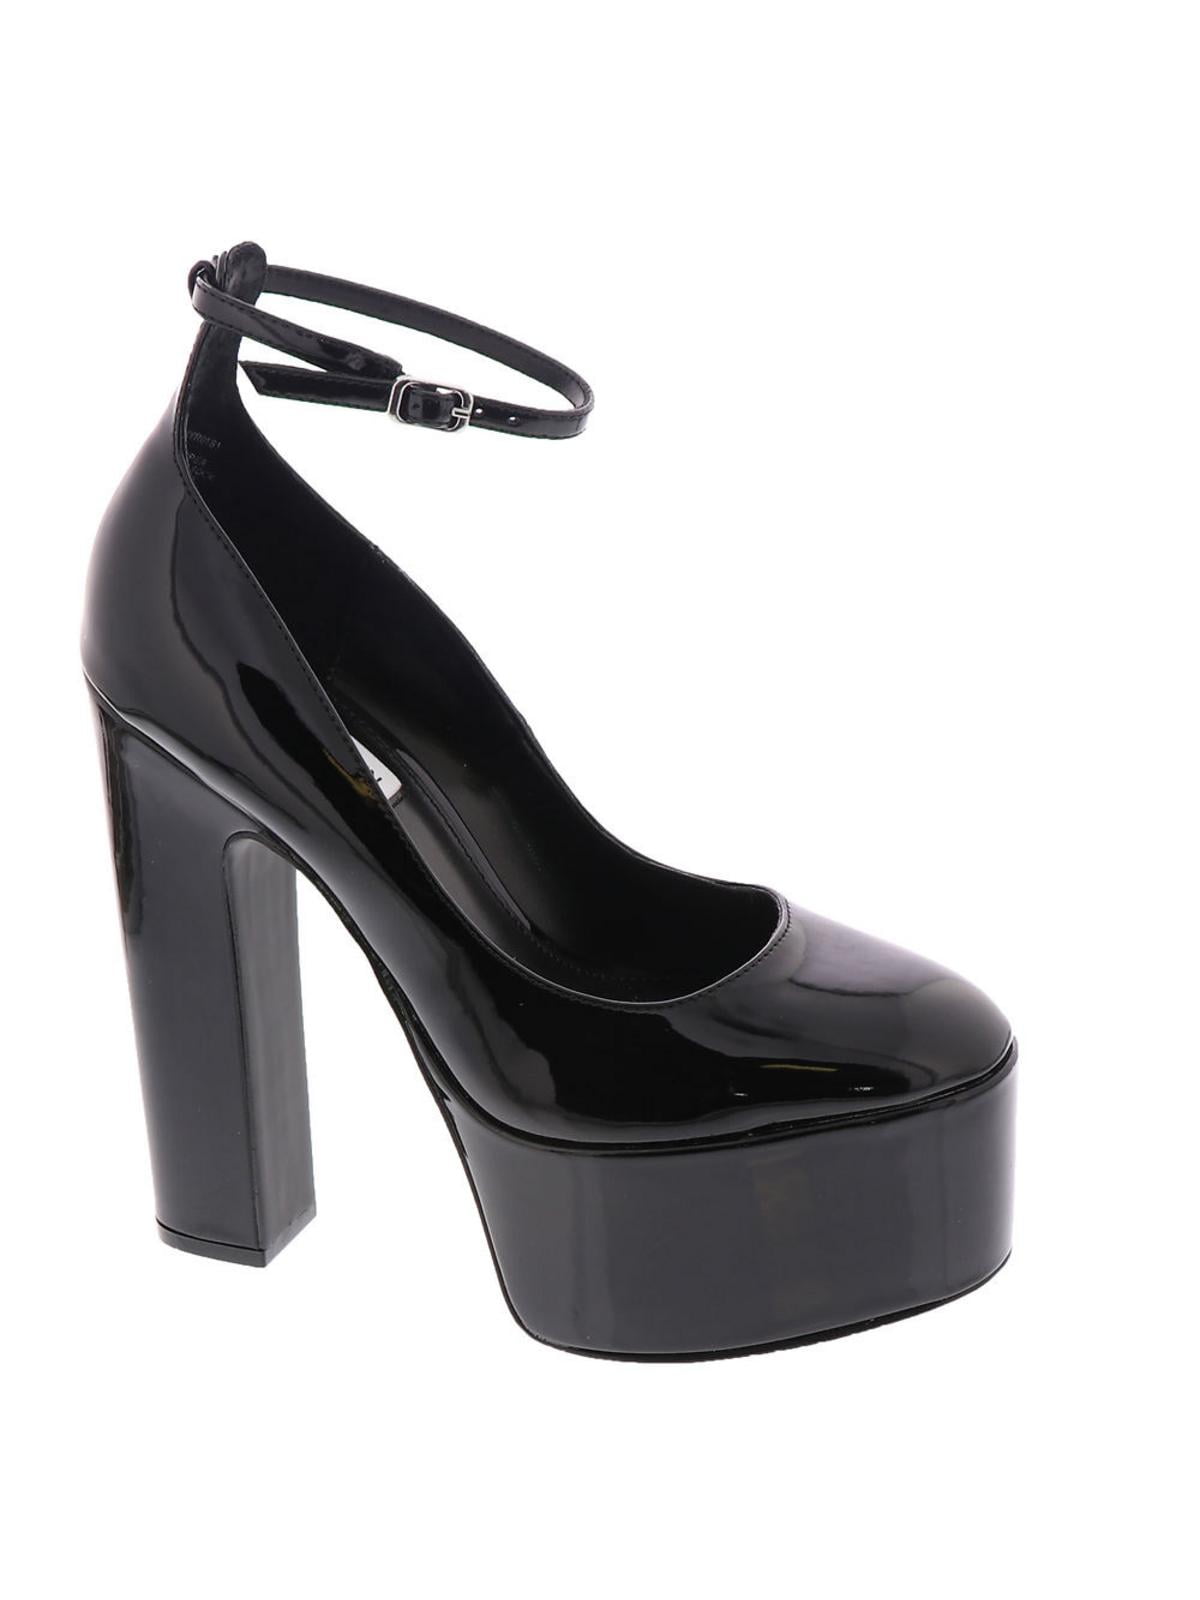 HSMQHJWE Strappy High Heels 4 Inch Wedge Sandals Women's Ankle Strap High  Heels Open Toe Pump Heeled Sandals Shoes Black,7) - Walmart.com